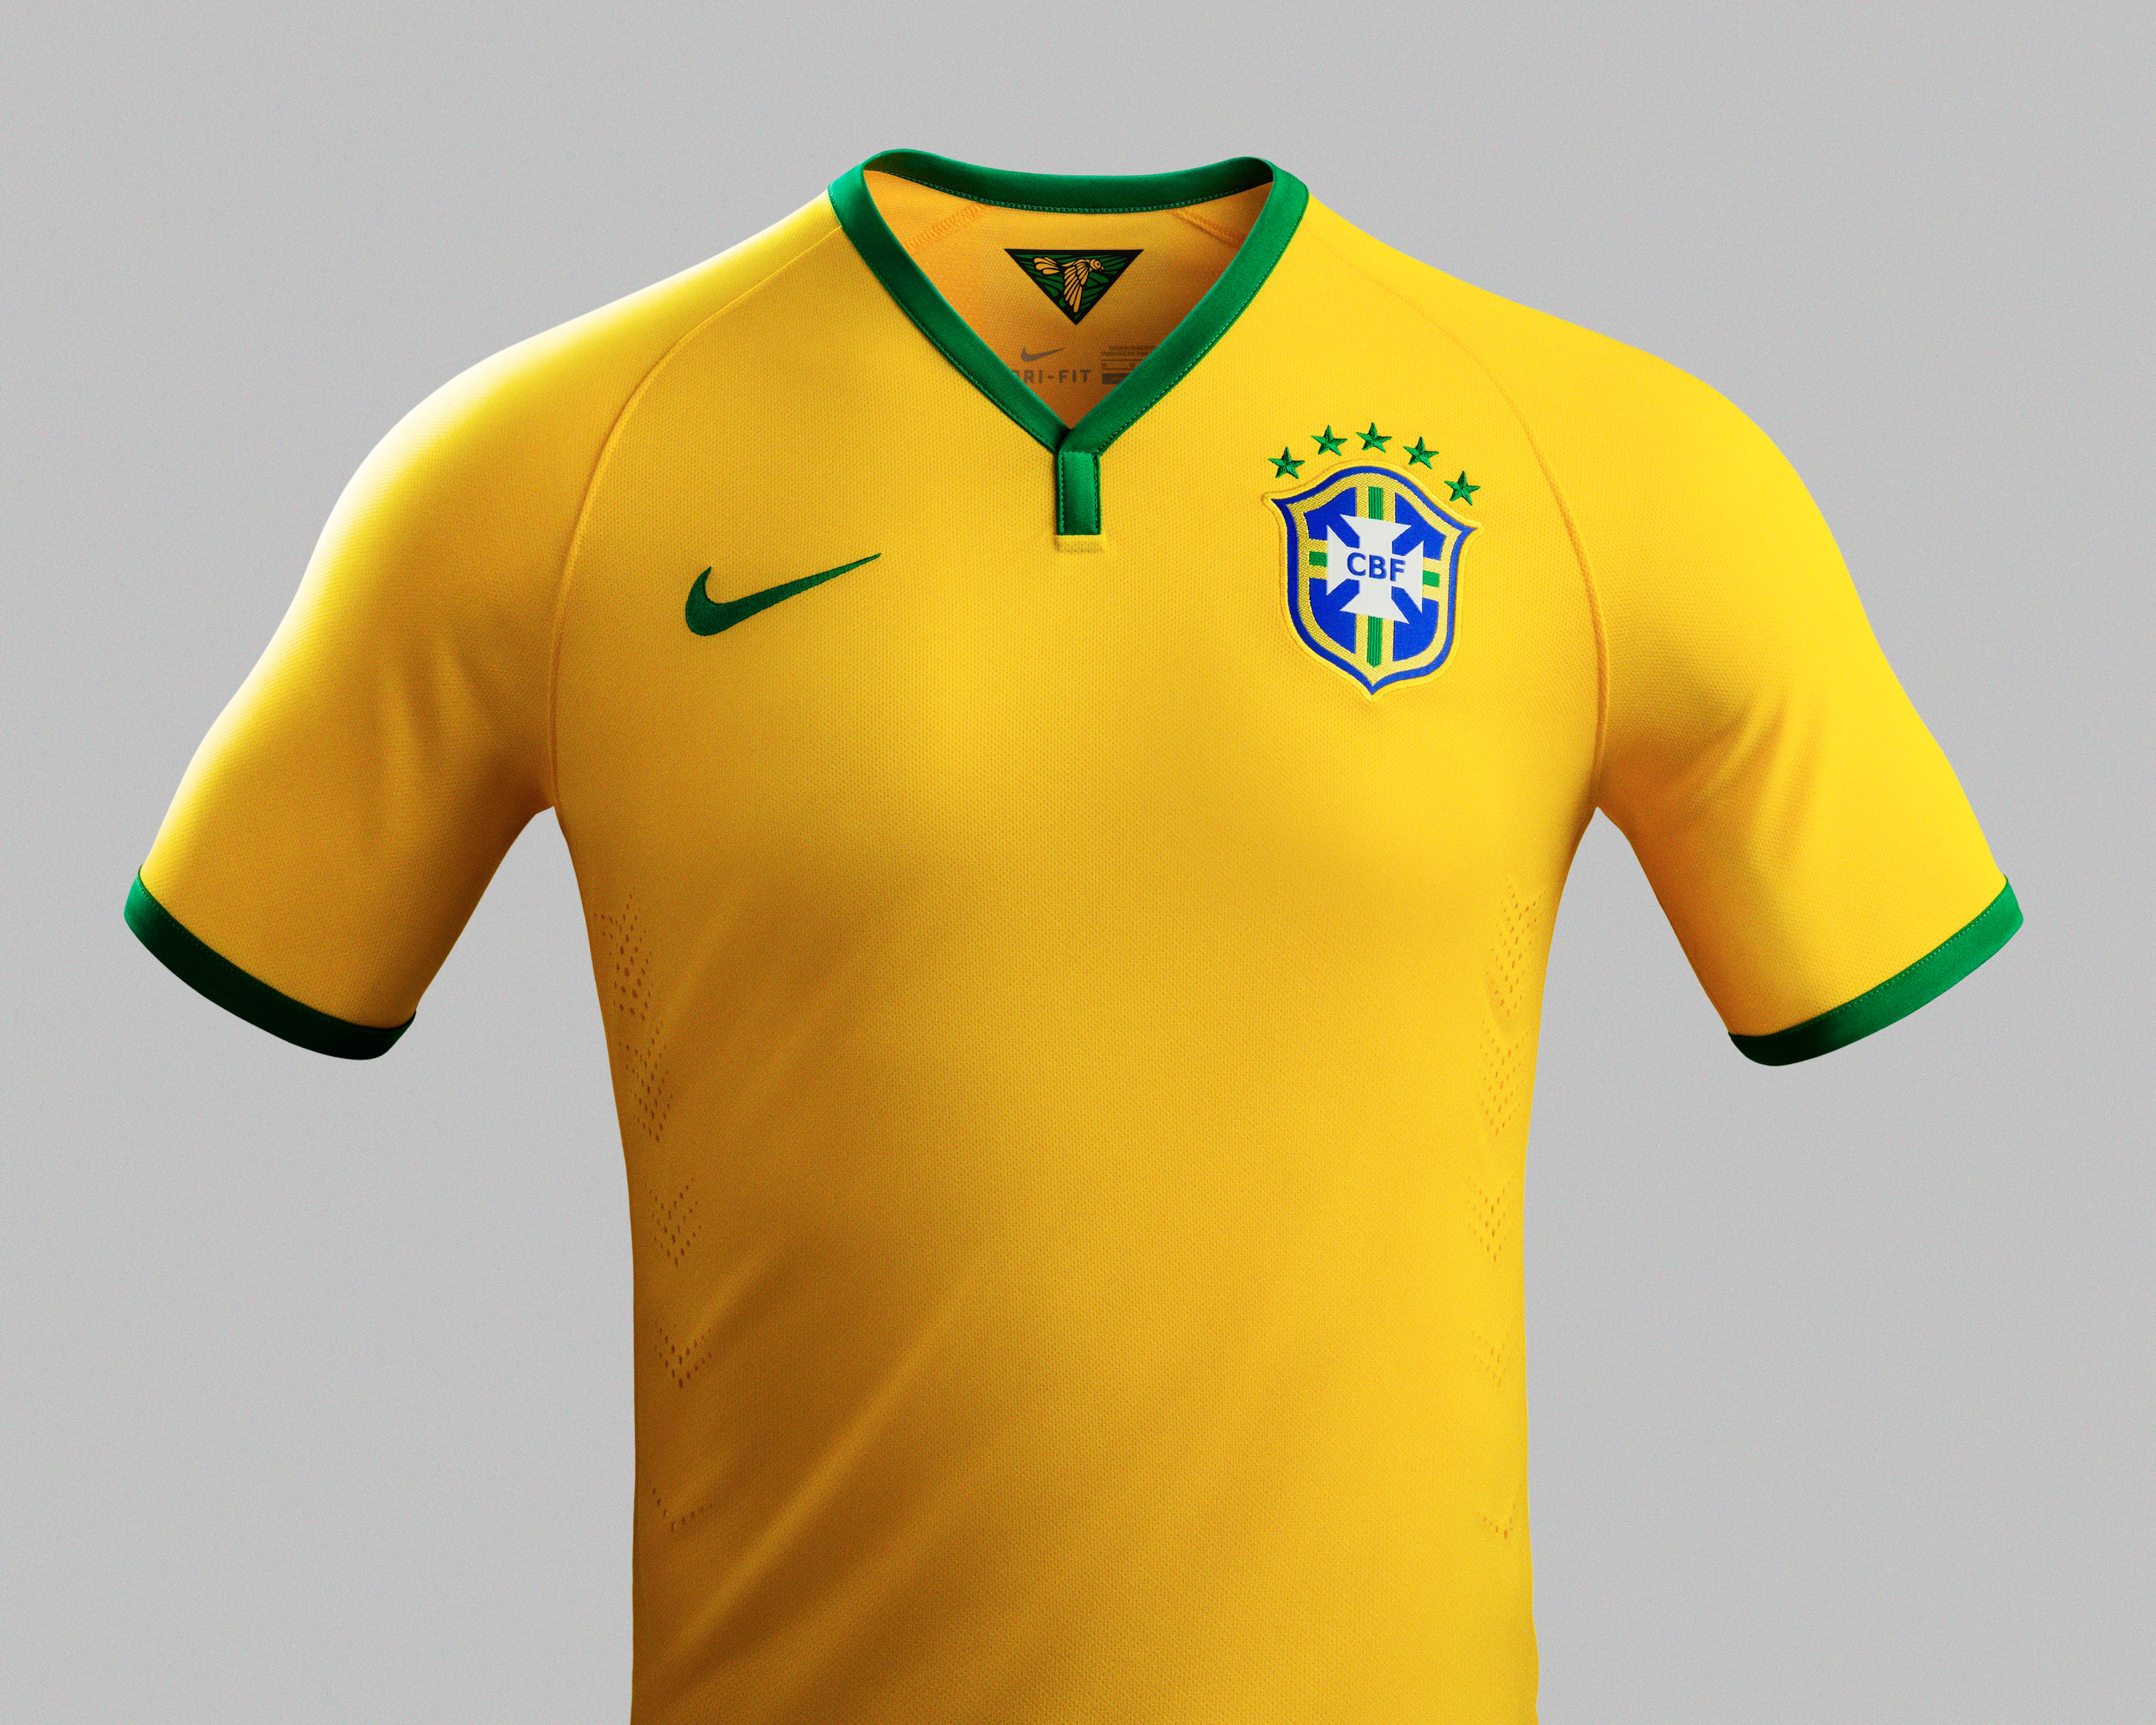 Brasilien Brasil Maillot Jersey Trikot  in Größe L oder XL neu WM 2014 